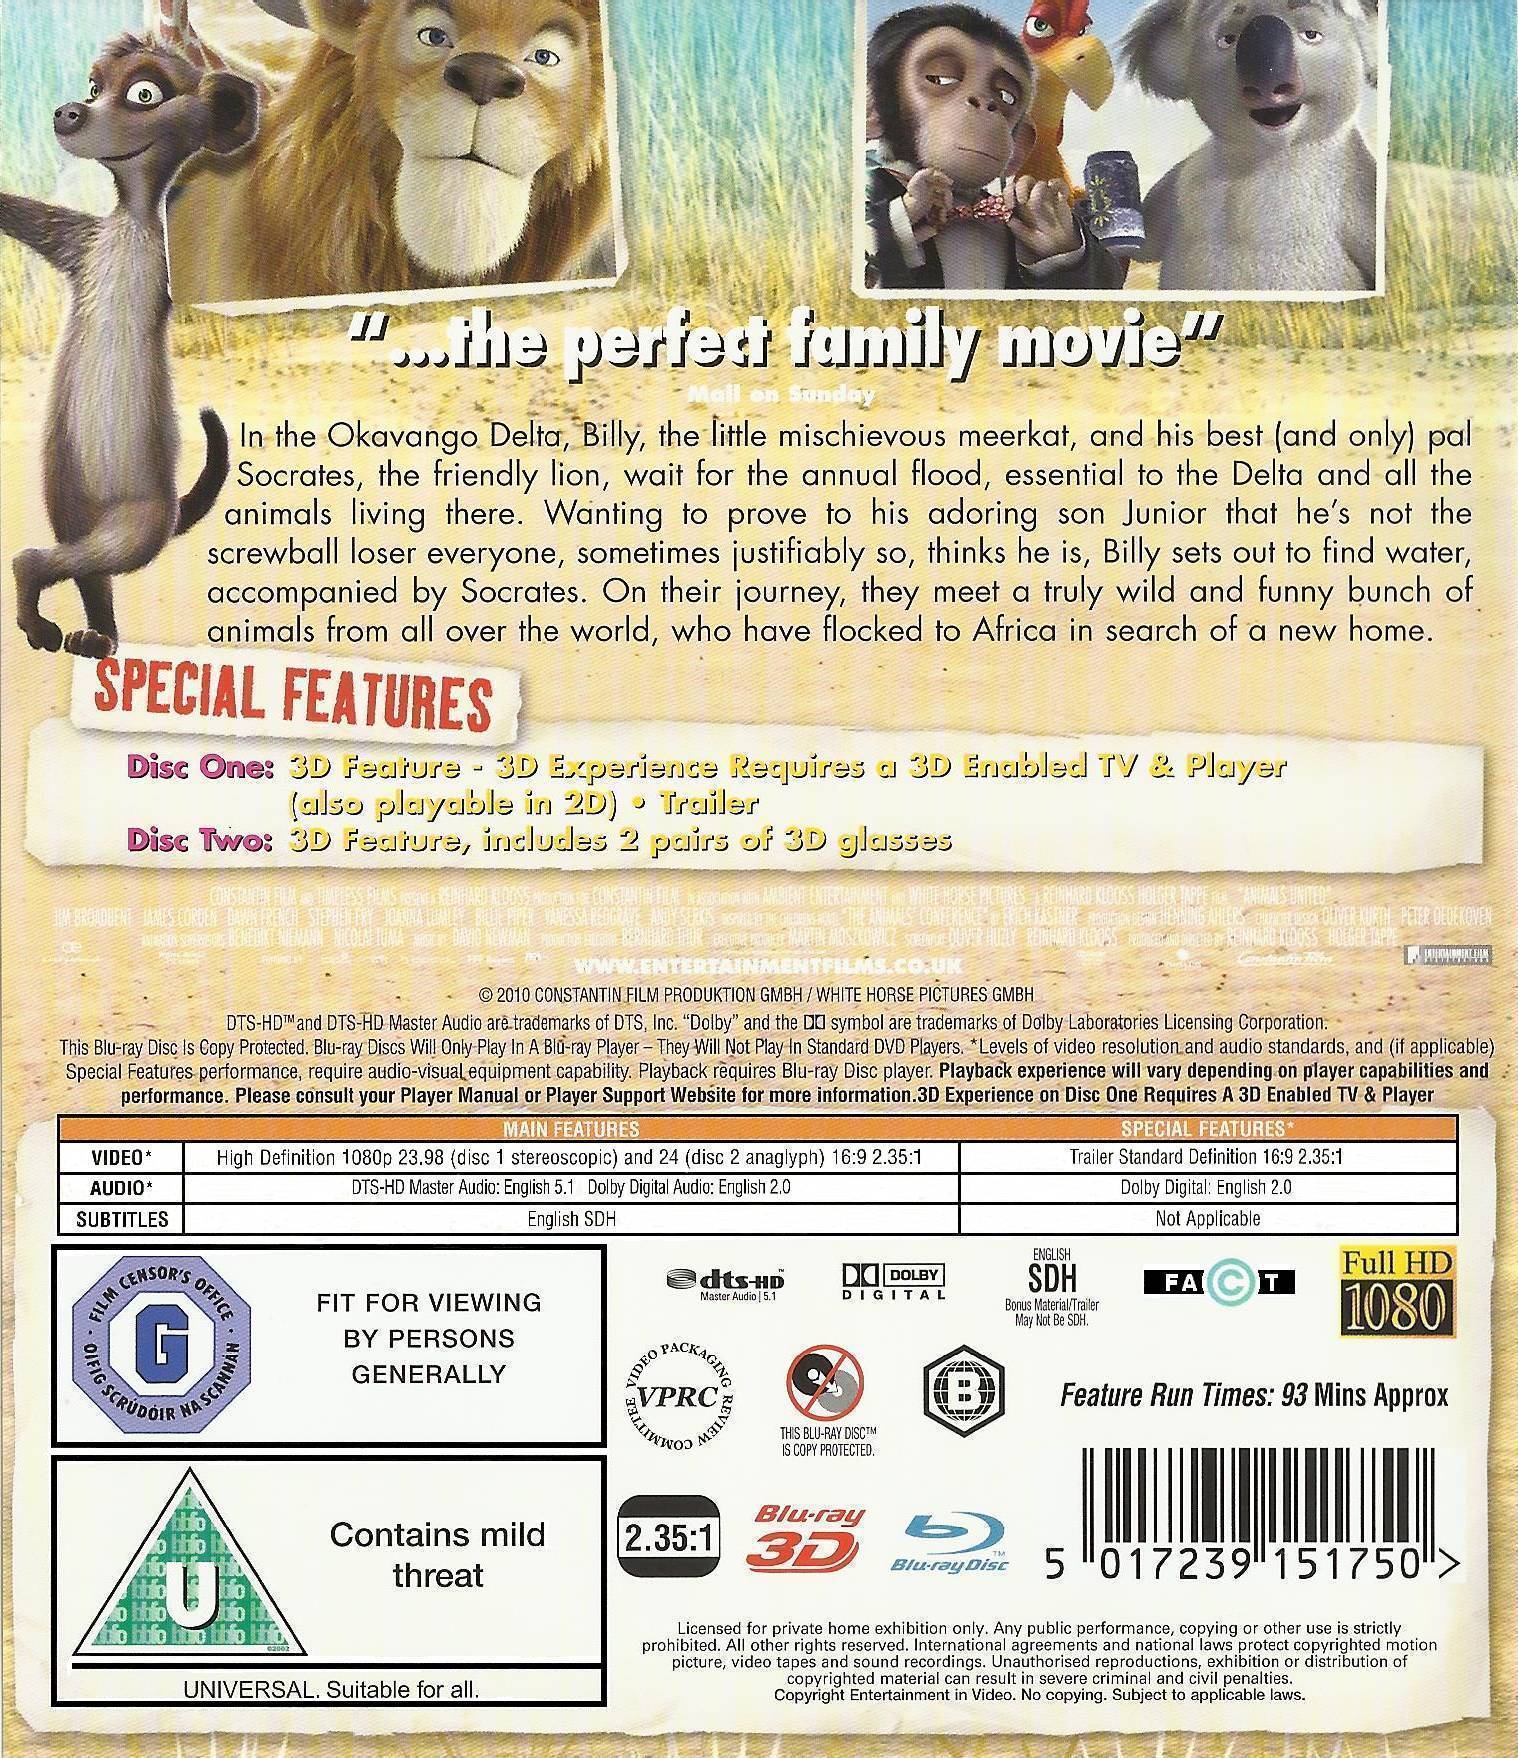 Animals United | Le Cinema Paradiso Blu-Ray reviews and DVD reviews